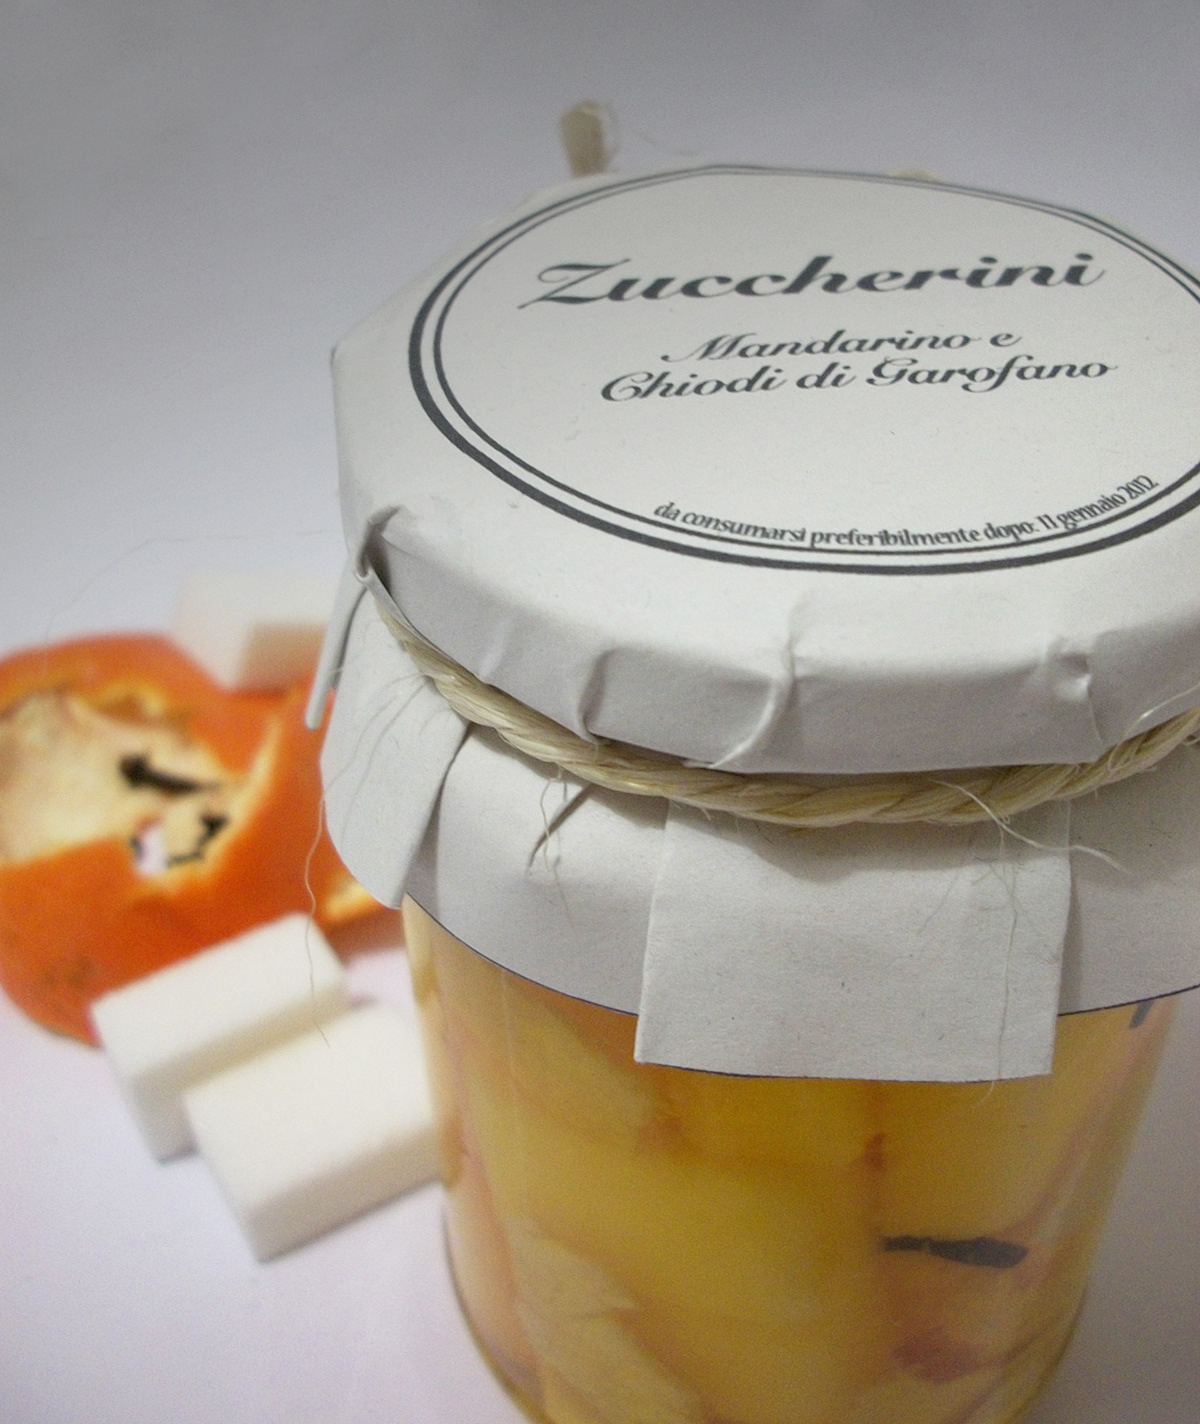 zuccherini alcool Pack torino mandarini chiodi di garofano zollette di zucchero confettura manifattura Cucina handmade